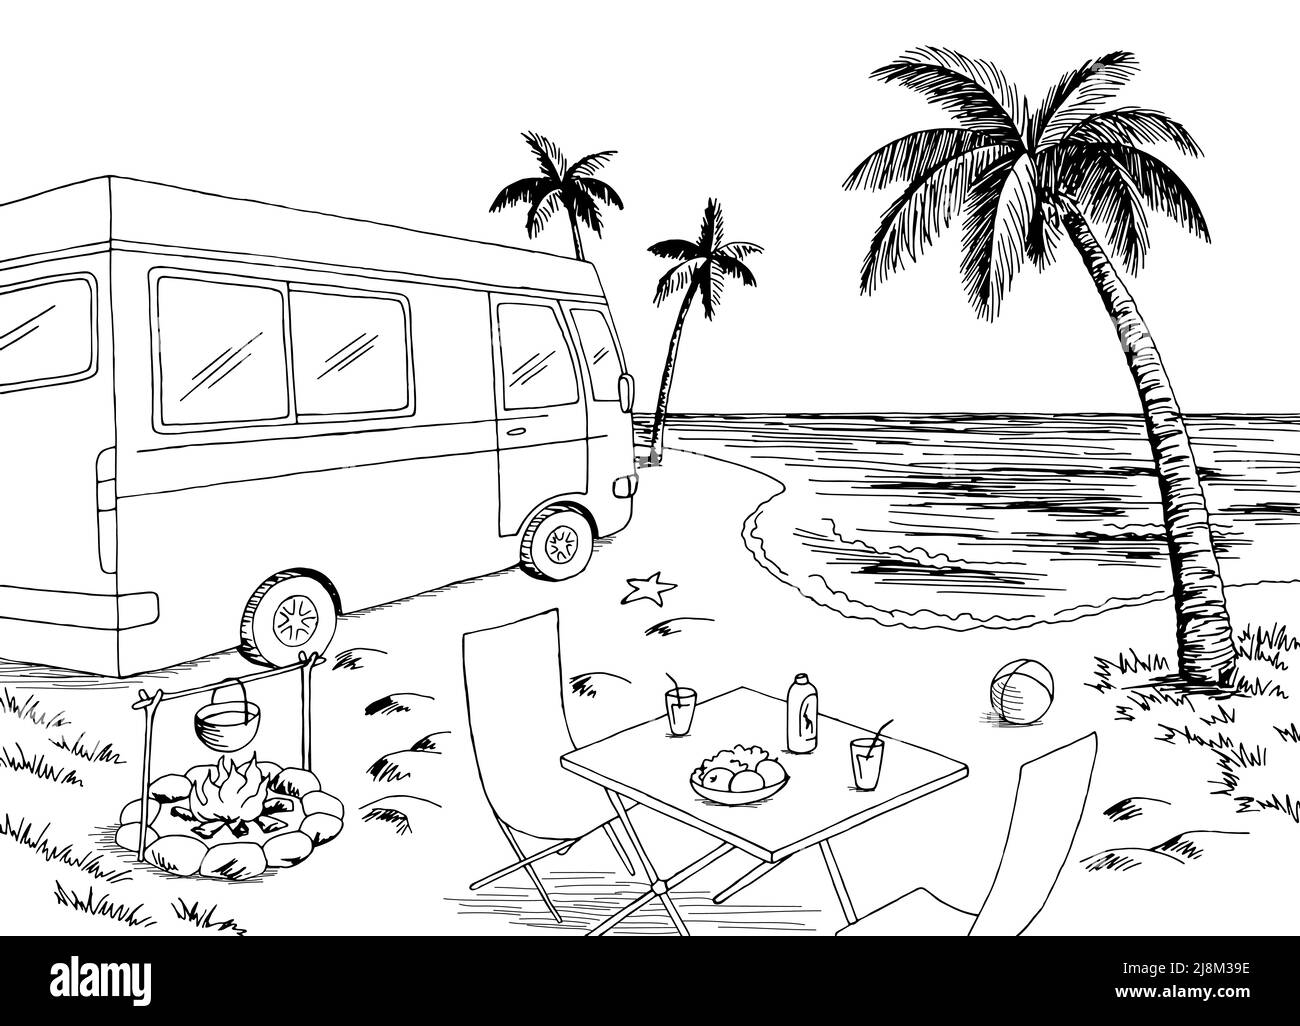 Küste Camping Grafik Strand schwarz weiß Landschaft Skizze Illustration Vektor Stock Vektor